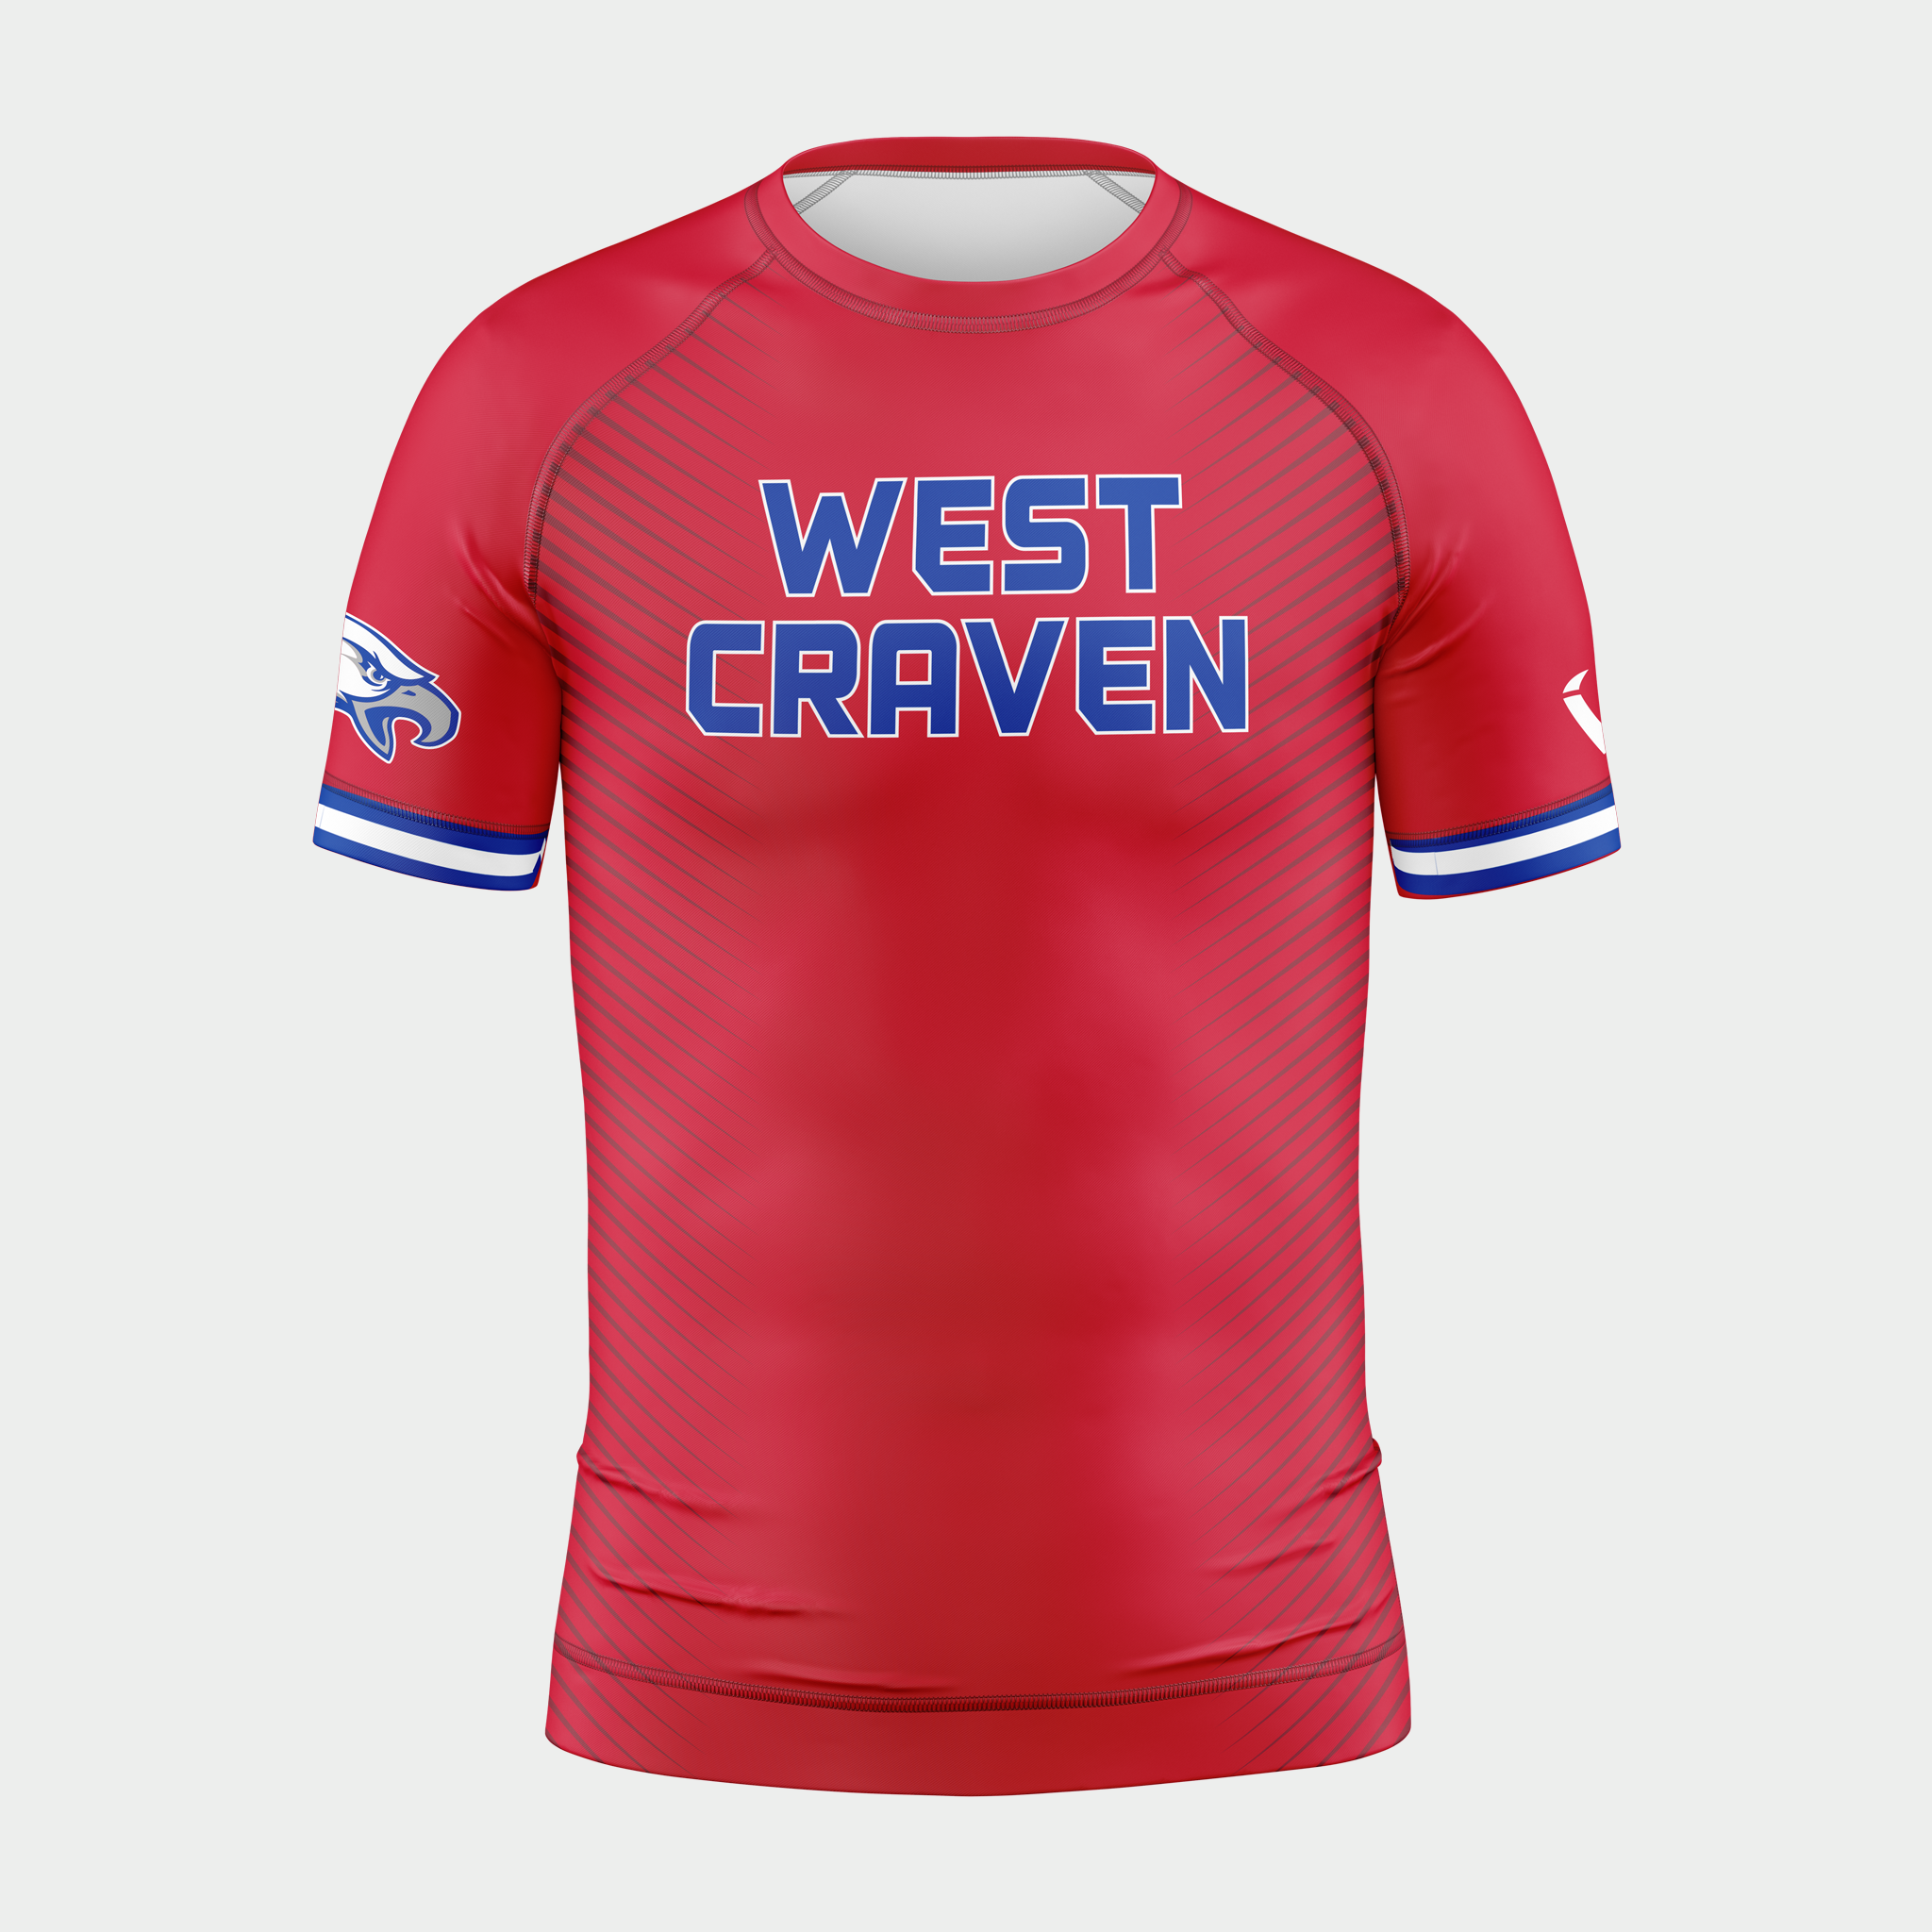 West Craven - Compression Top